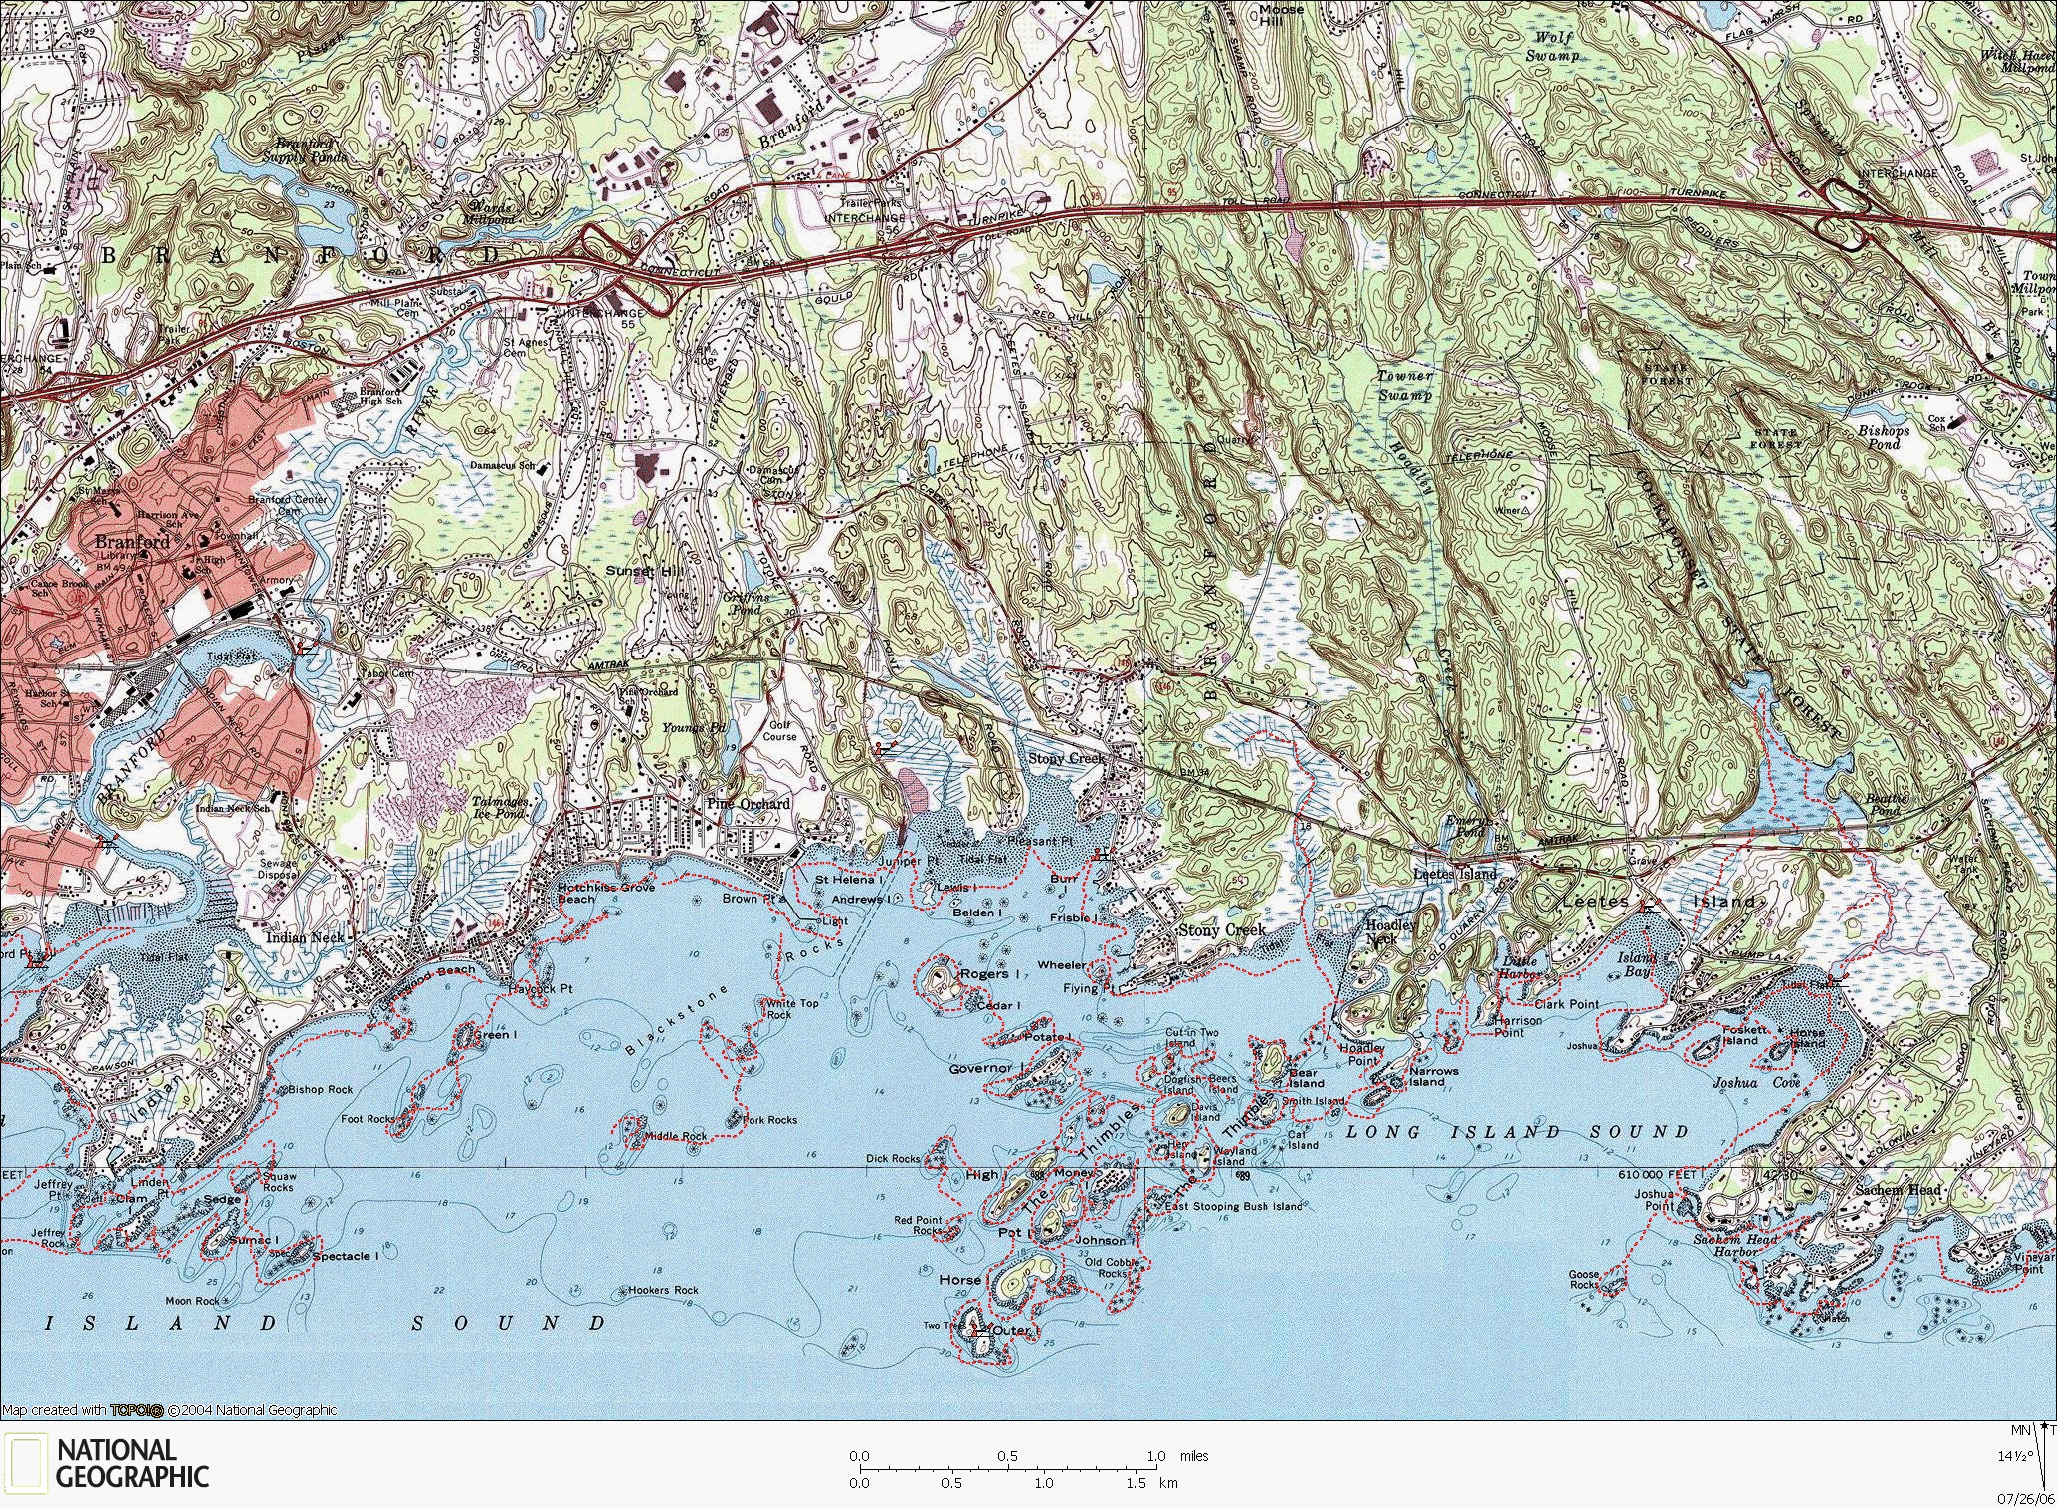 Connecticut, Sea, kayaking, Map, coastal, Long Island Sound, Thimble Islands